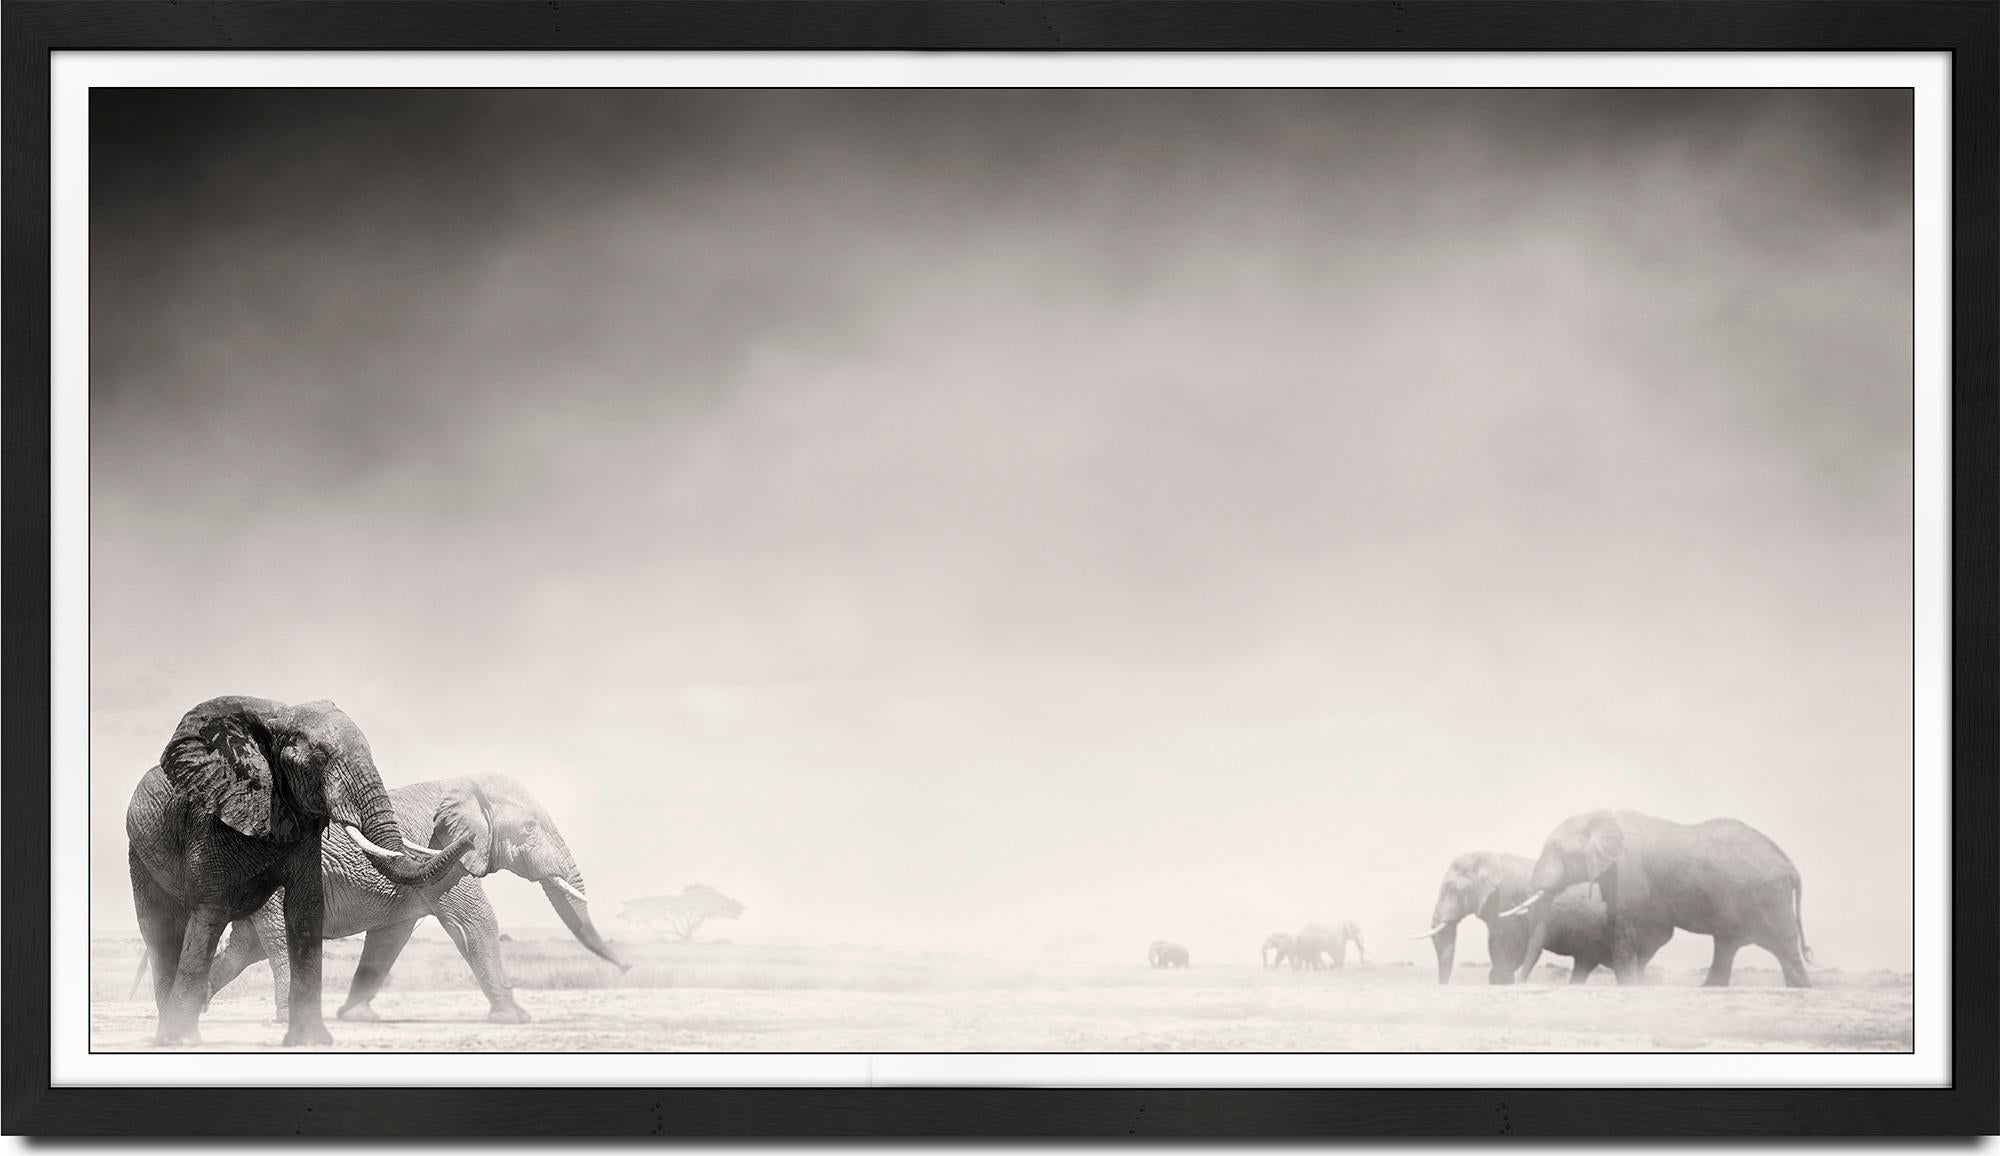 Elephants in the Dust I, Kenya, Elephant, wildlife, b&w photography - Photograph by Joachim Schmeisser